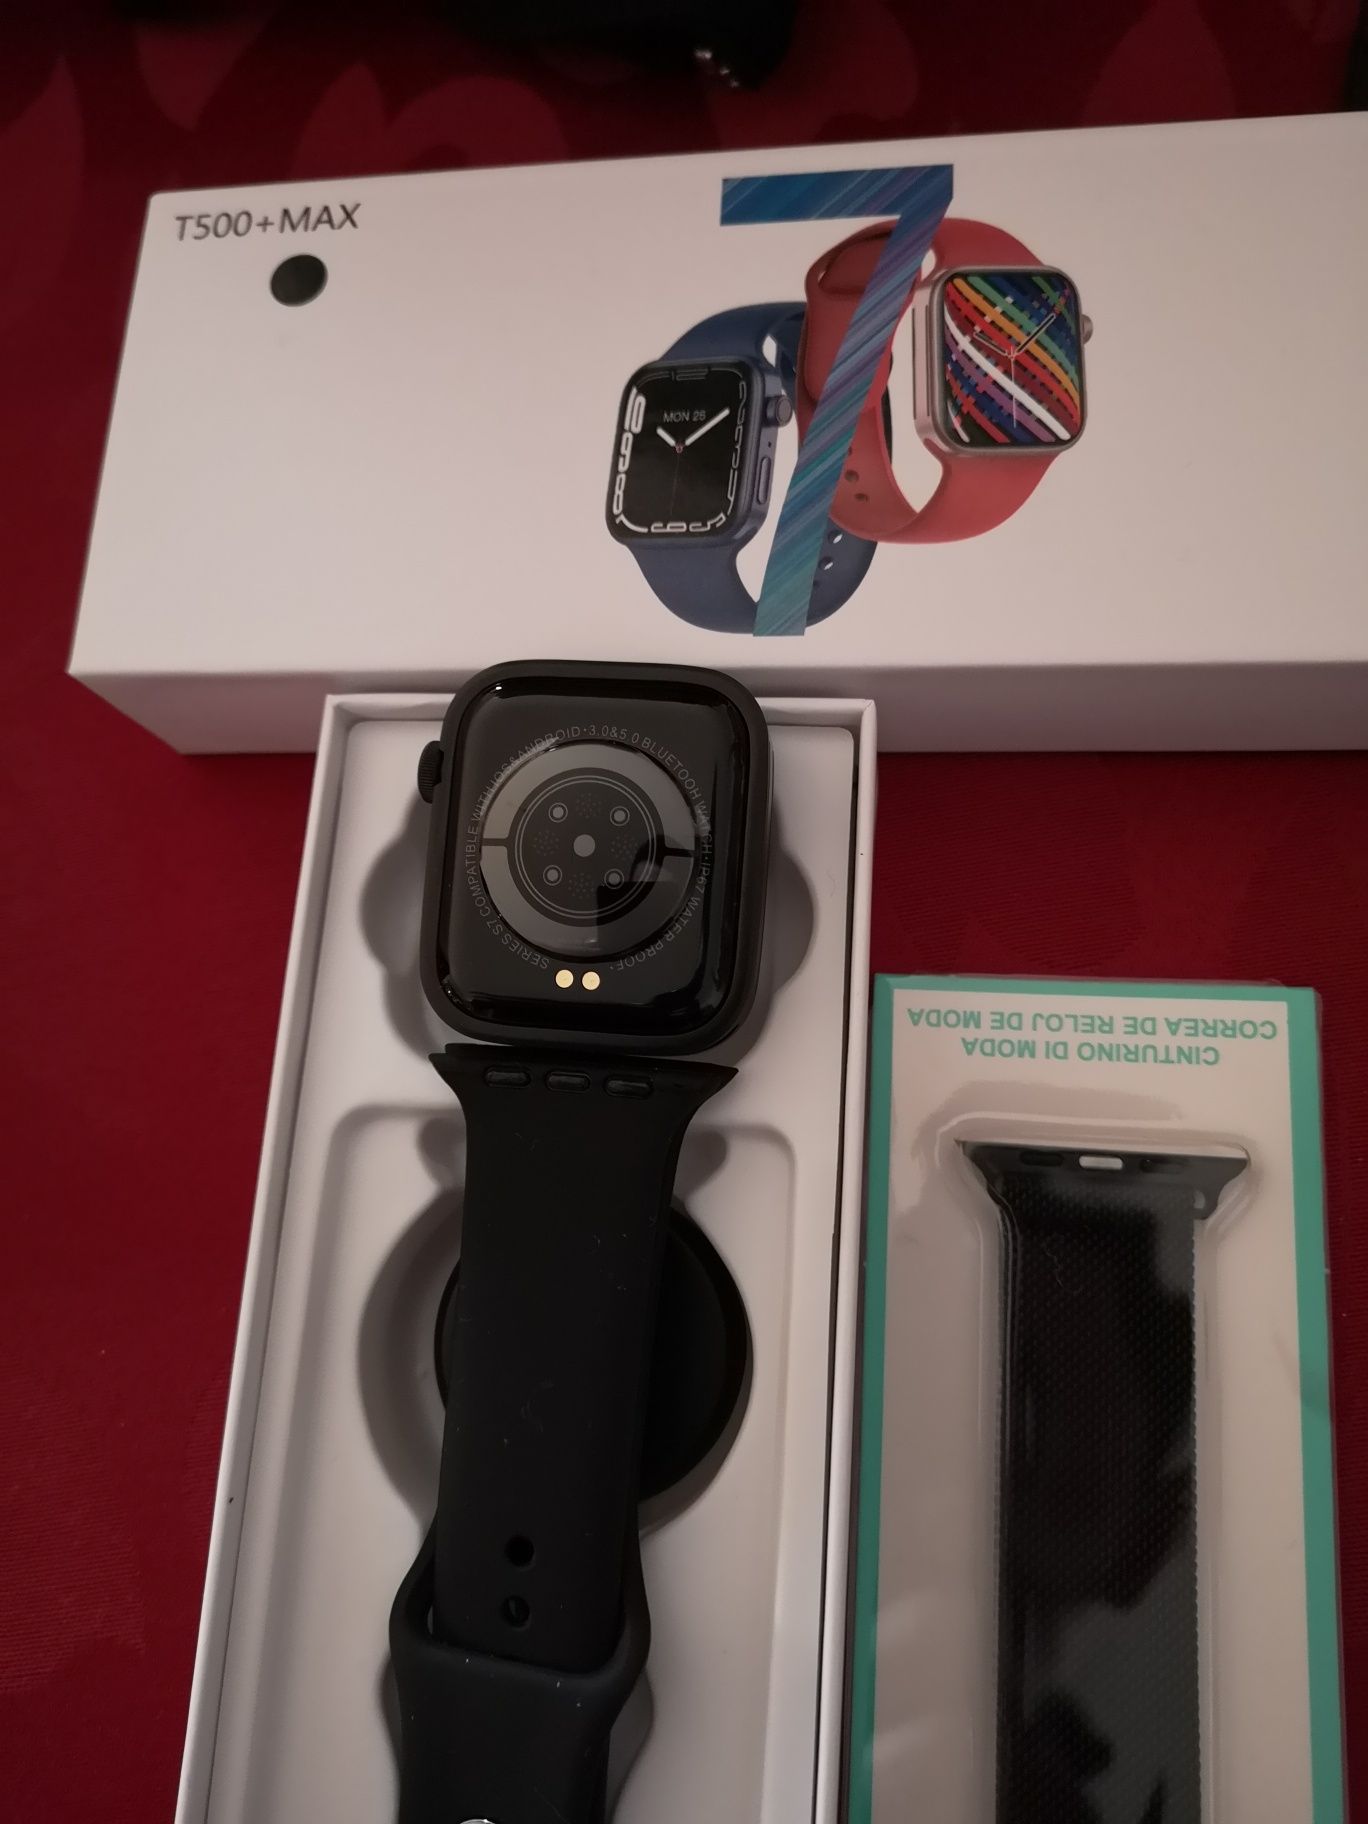 Smartwatch T500 estilo AppleWatch NOVO